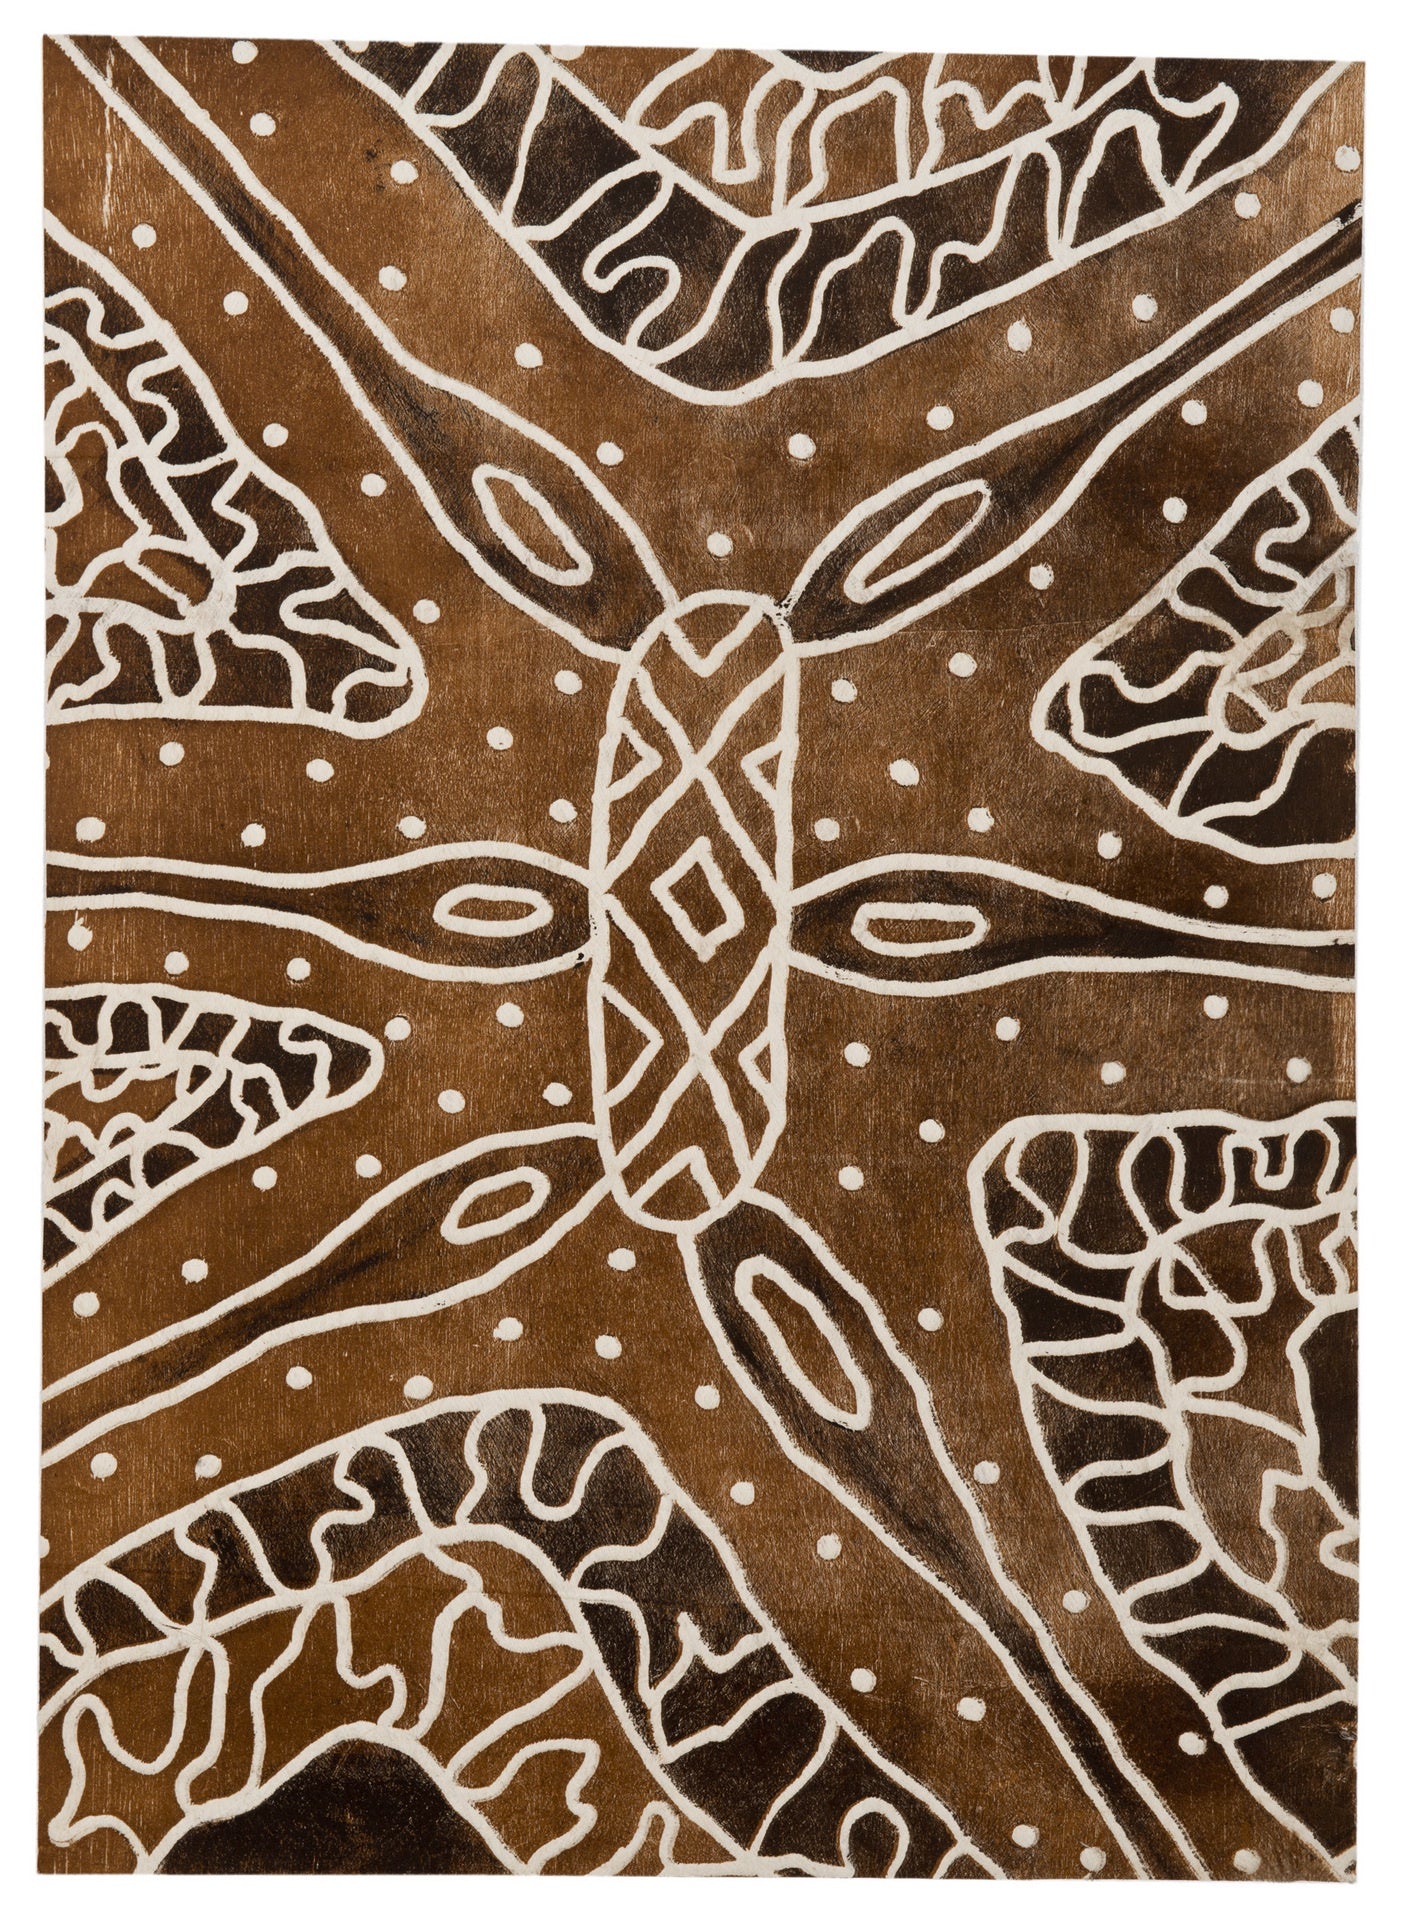 NAPOLEON OUI | 'Rainforest Shield Design Wabarr Gabay-Barra/Hunting for Termites (White Ants) I' | Print / Woodblock on Bark Cloth